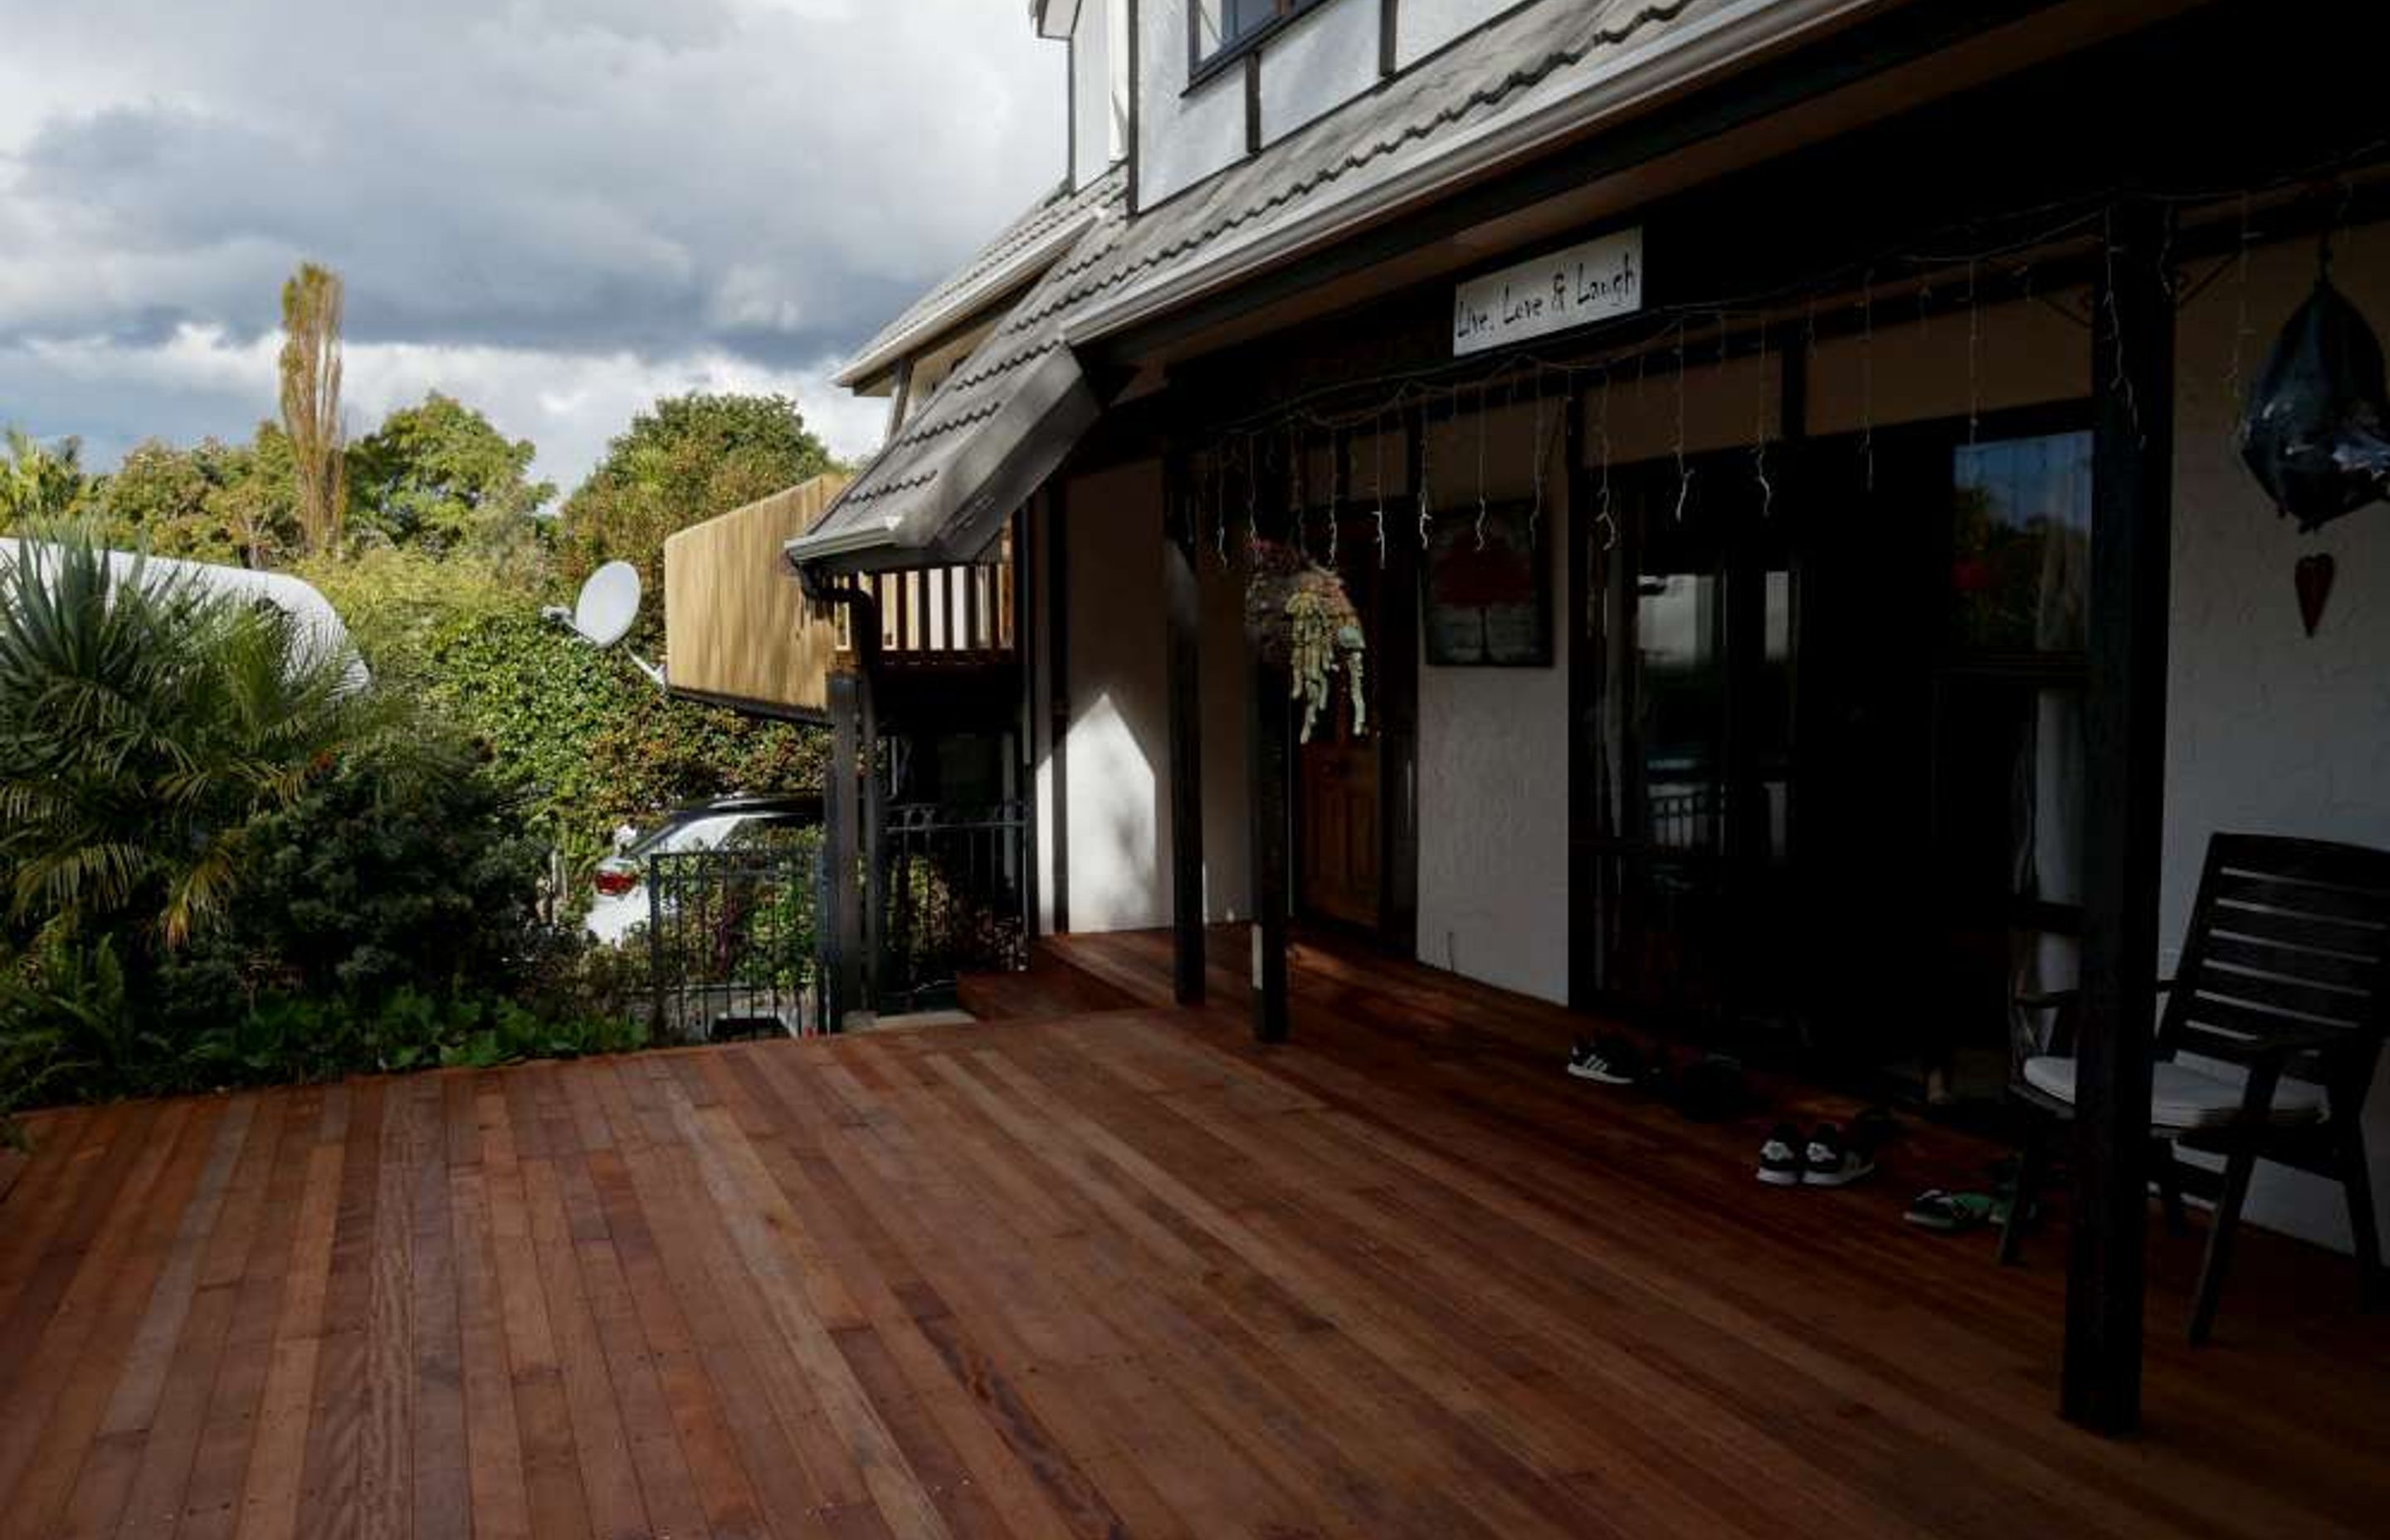 Kwila (Merbau) deck and bathroom renovation in Cockle Bay